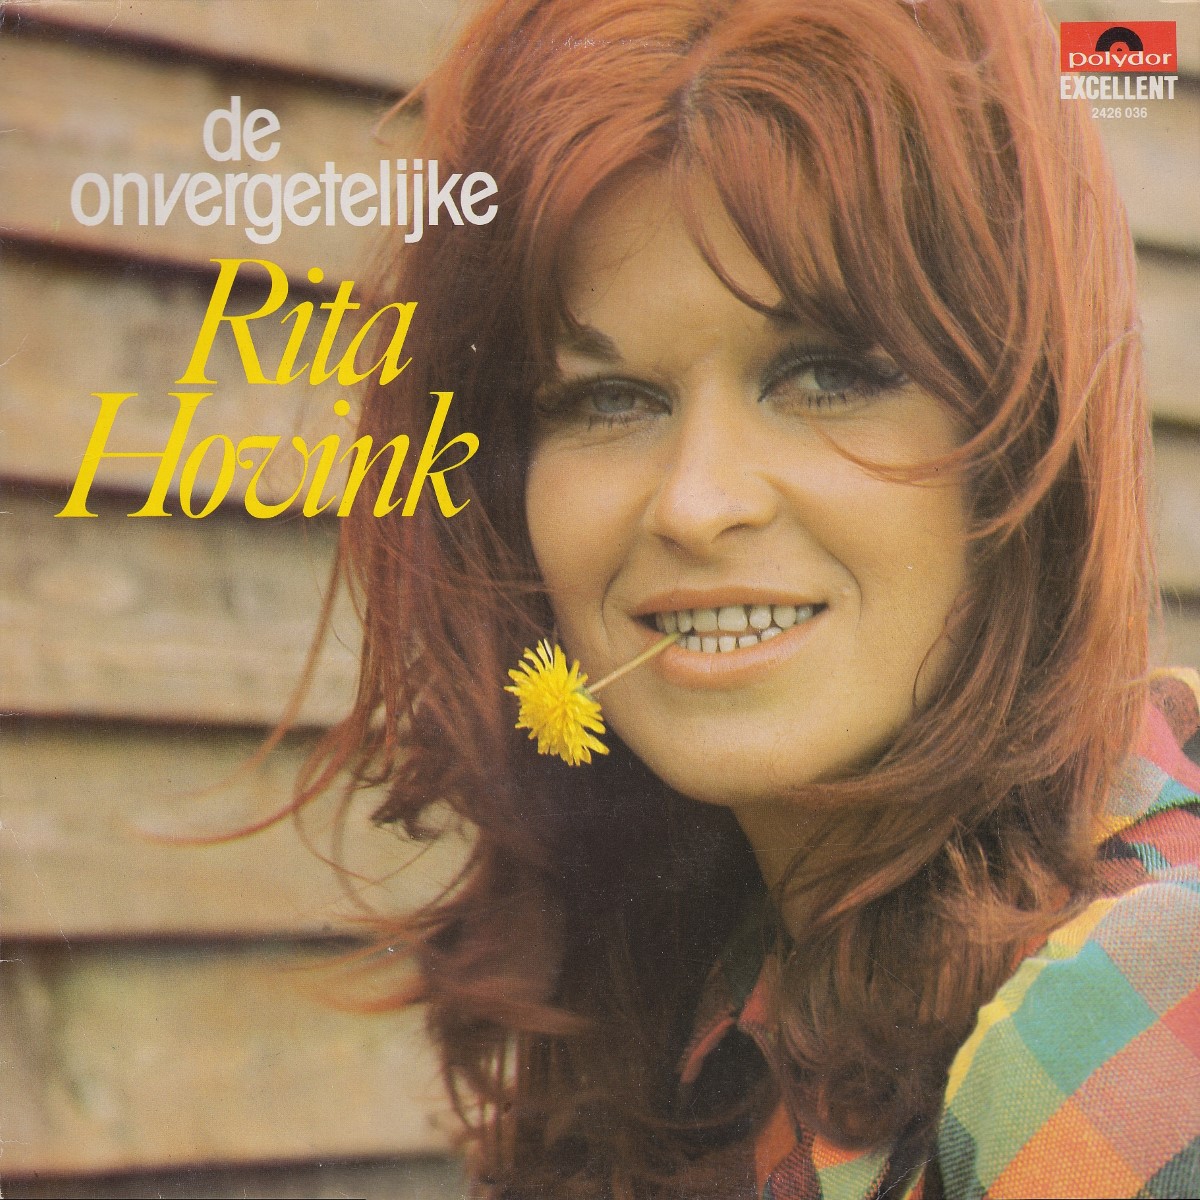 Rita Hovink - De Onvergetelijke Rita Hovink (1982)